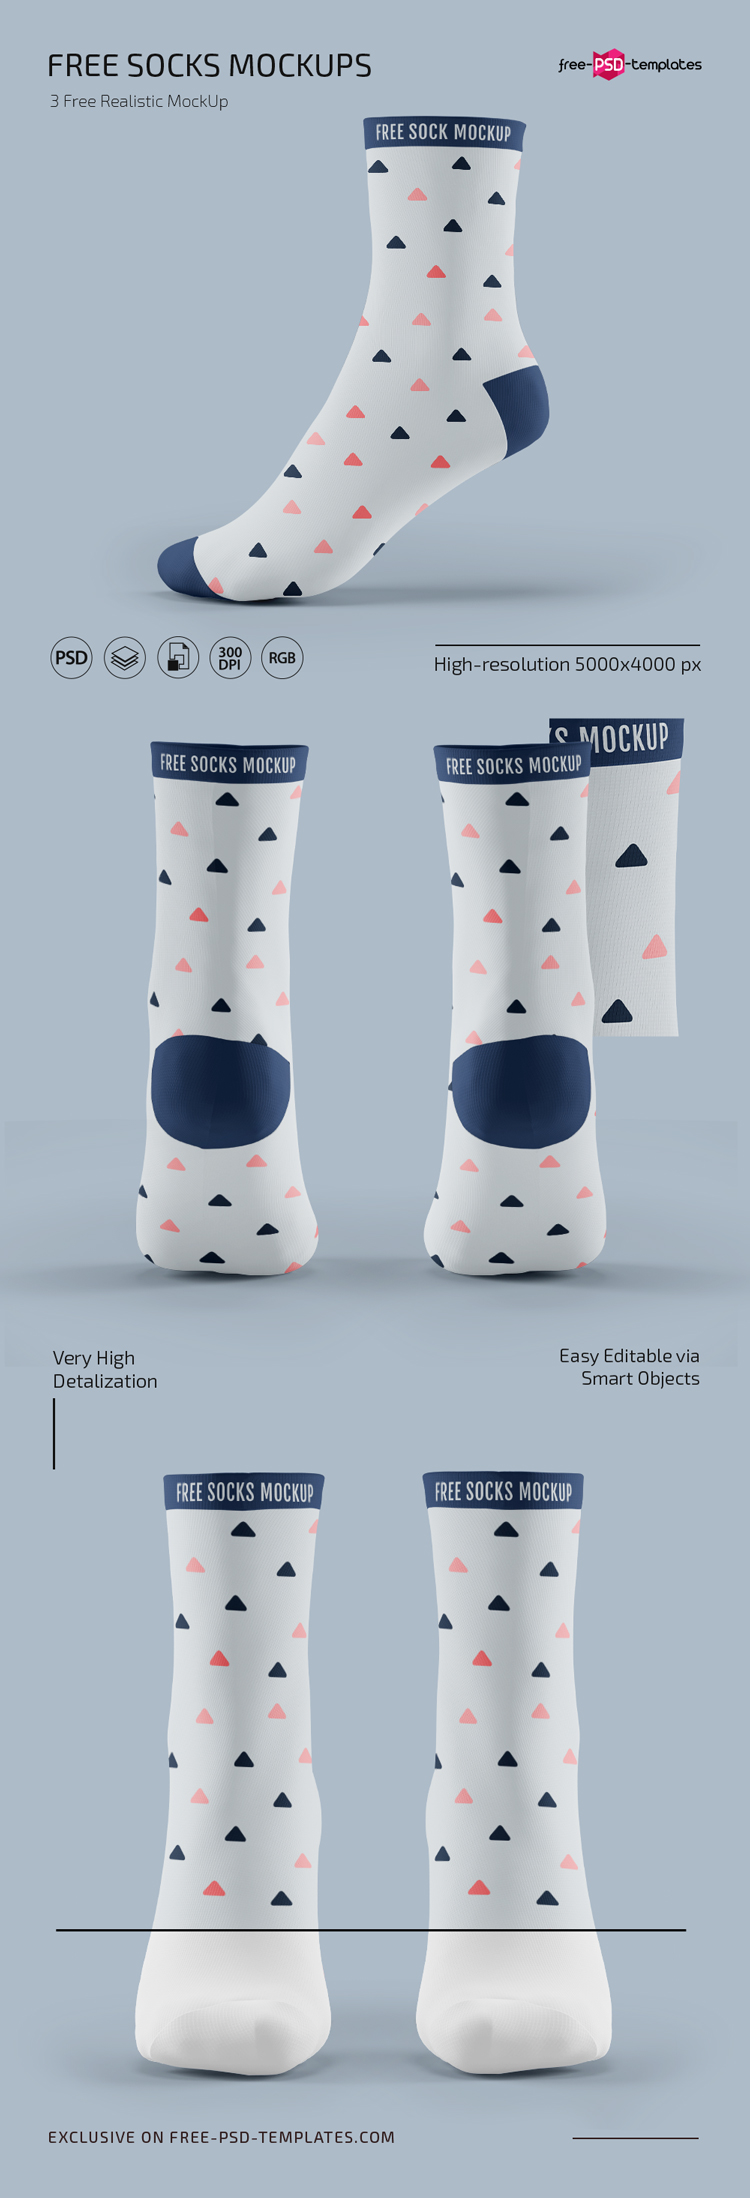 free-socks-mockups-in-psd-free-psd-templates